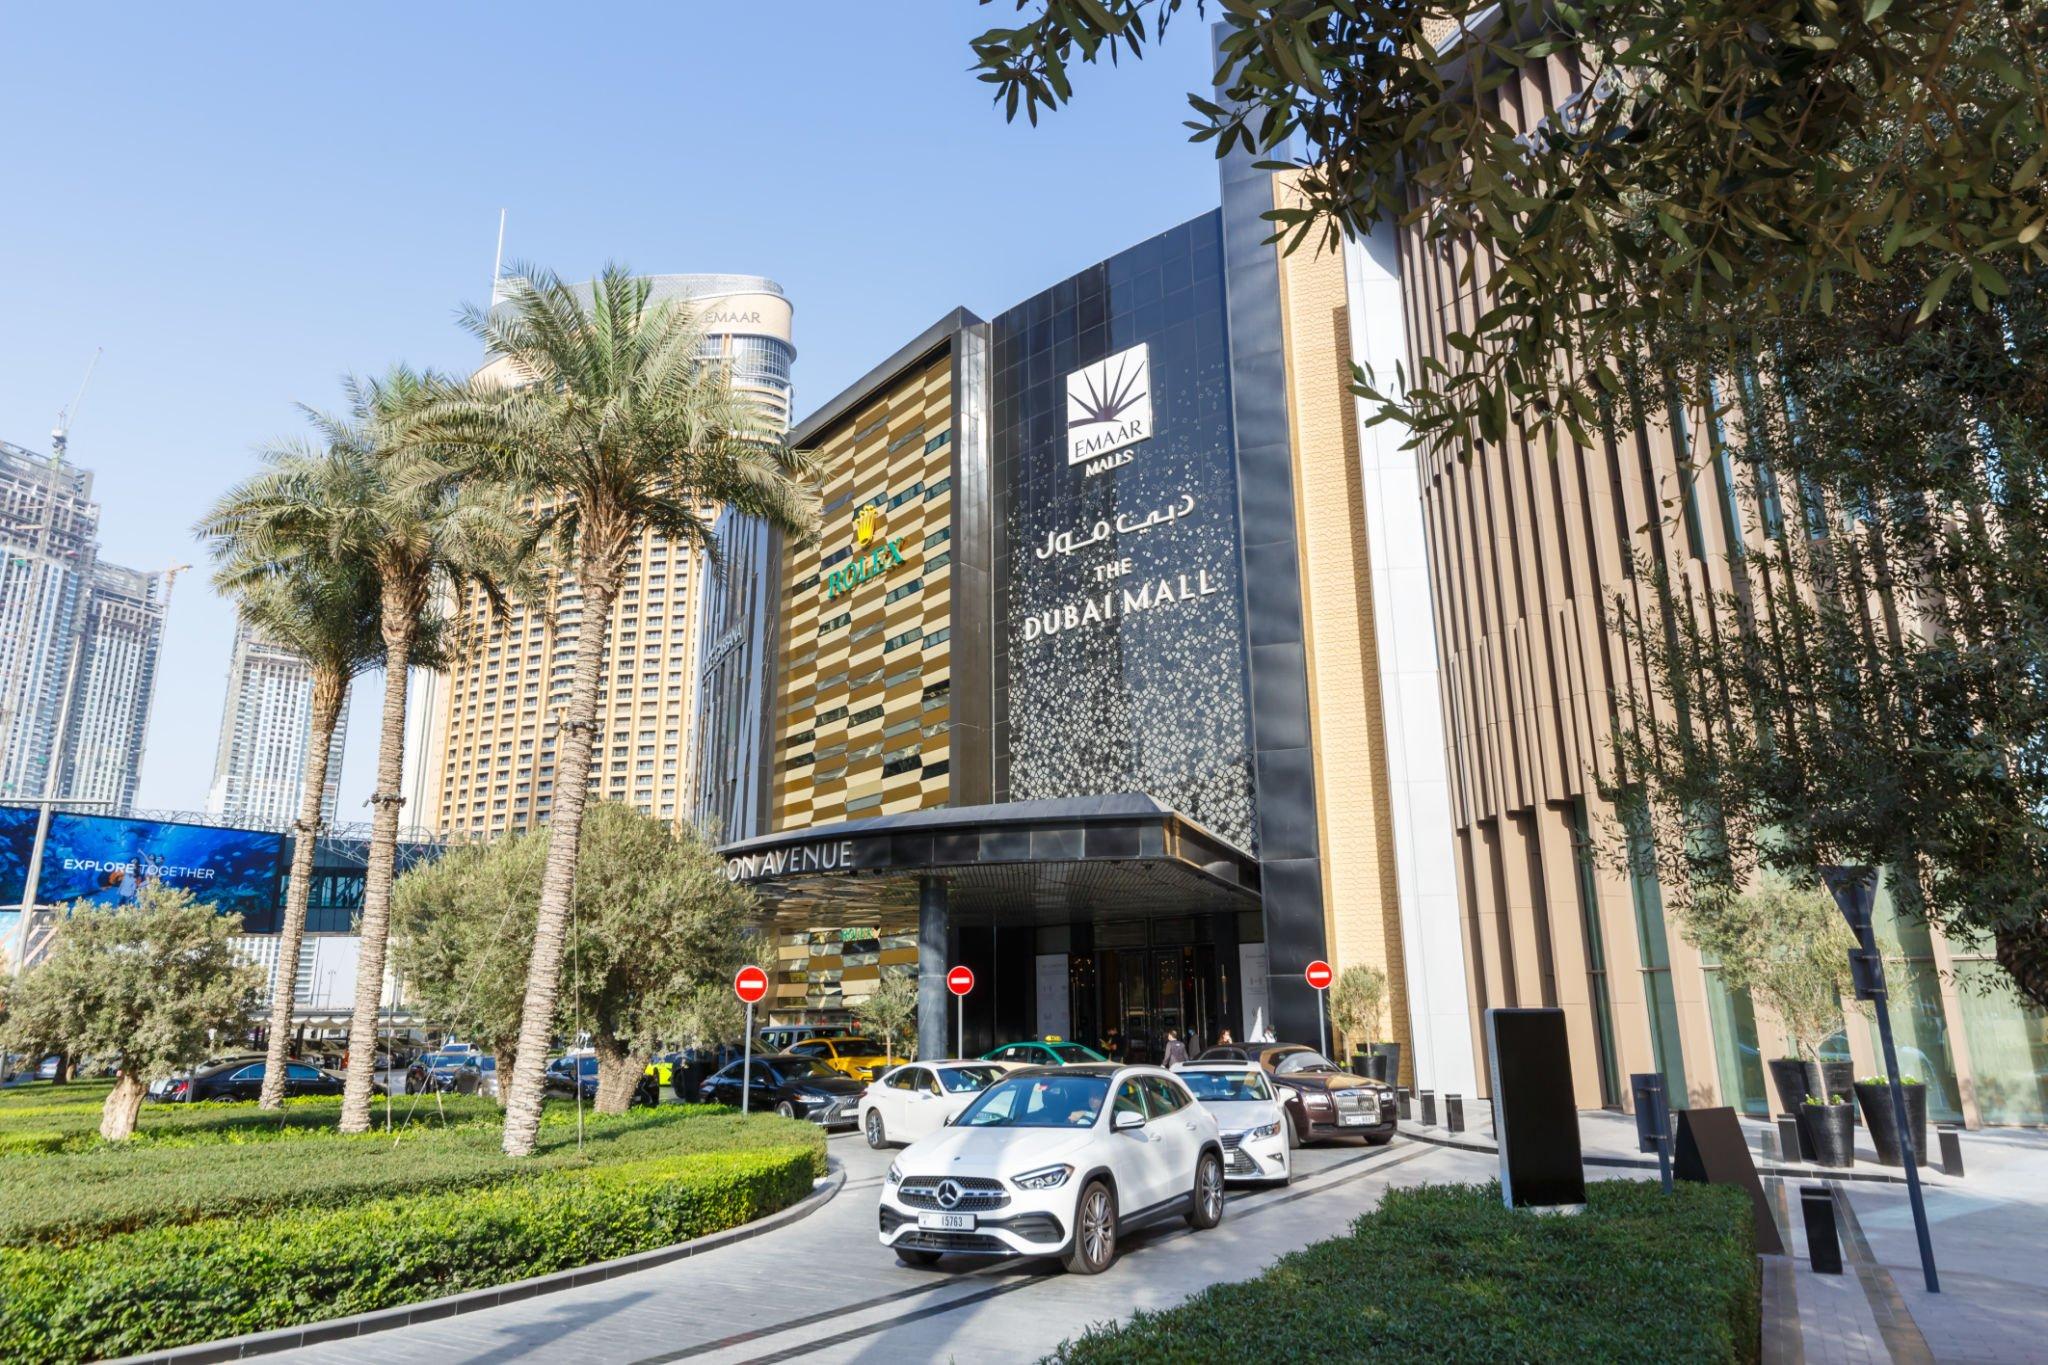 Cinema Parking, Dubai Mall Parking 3, Dubai Mall Cinema Parking, 